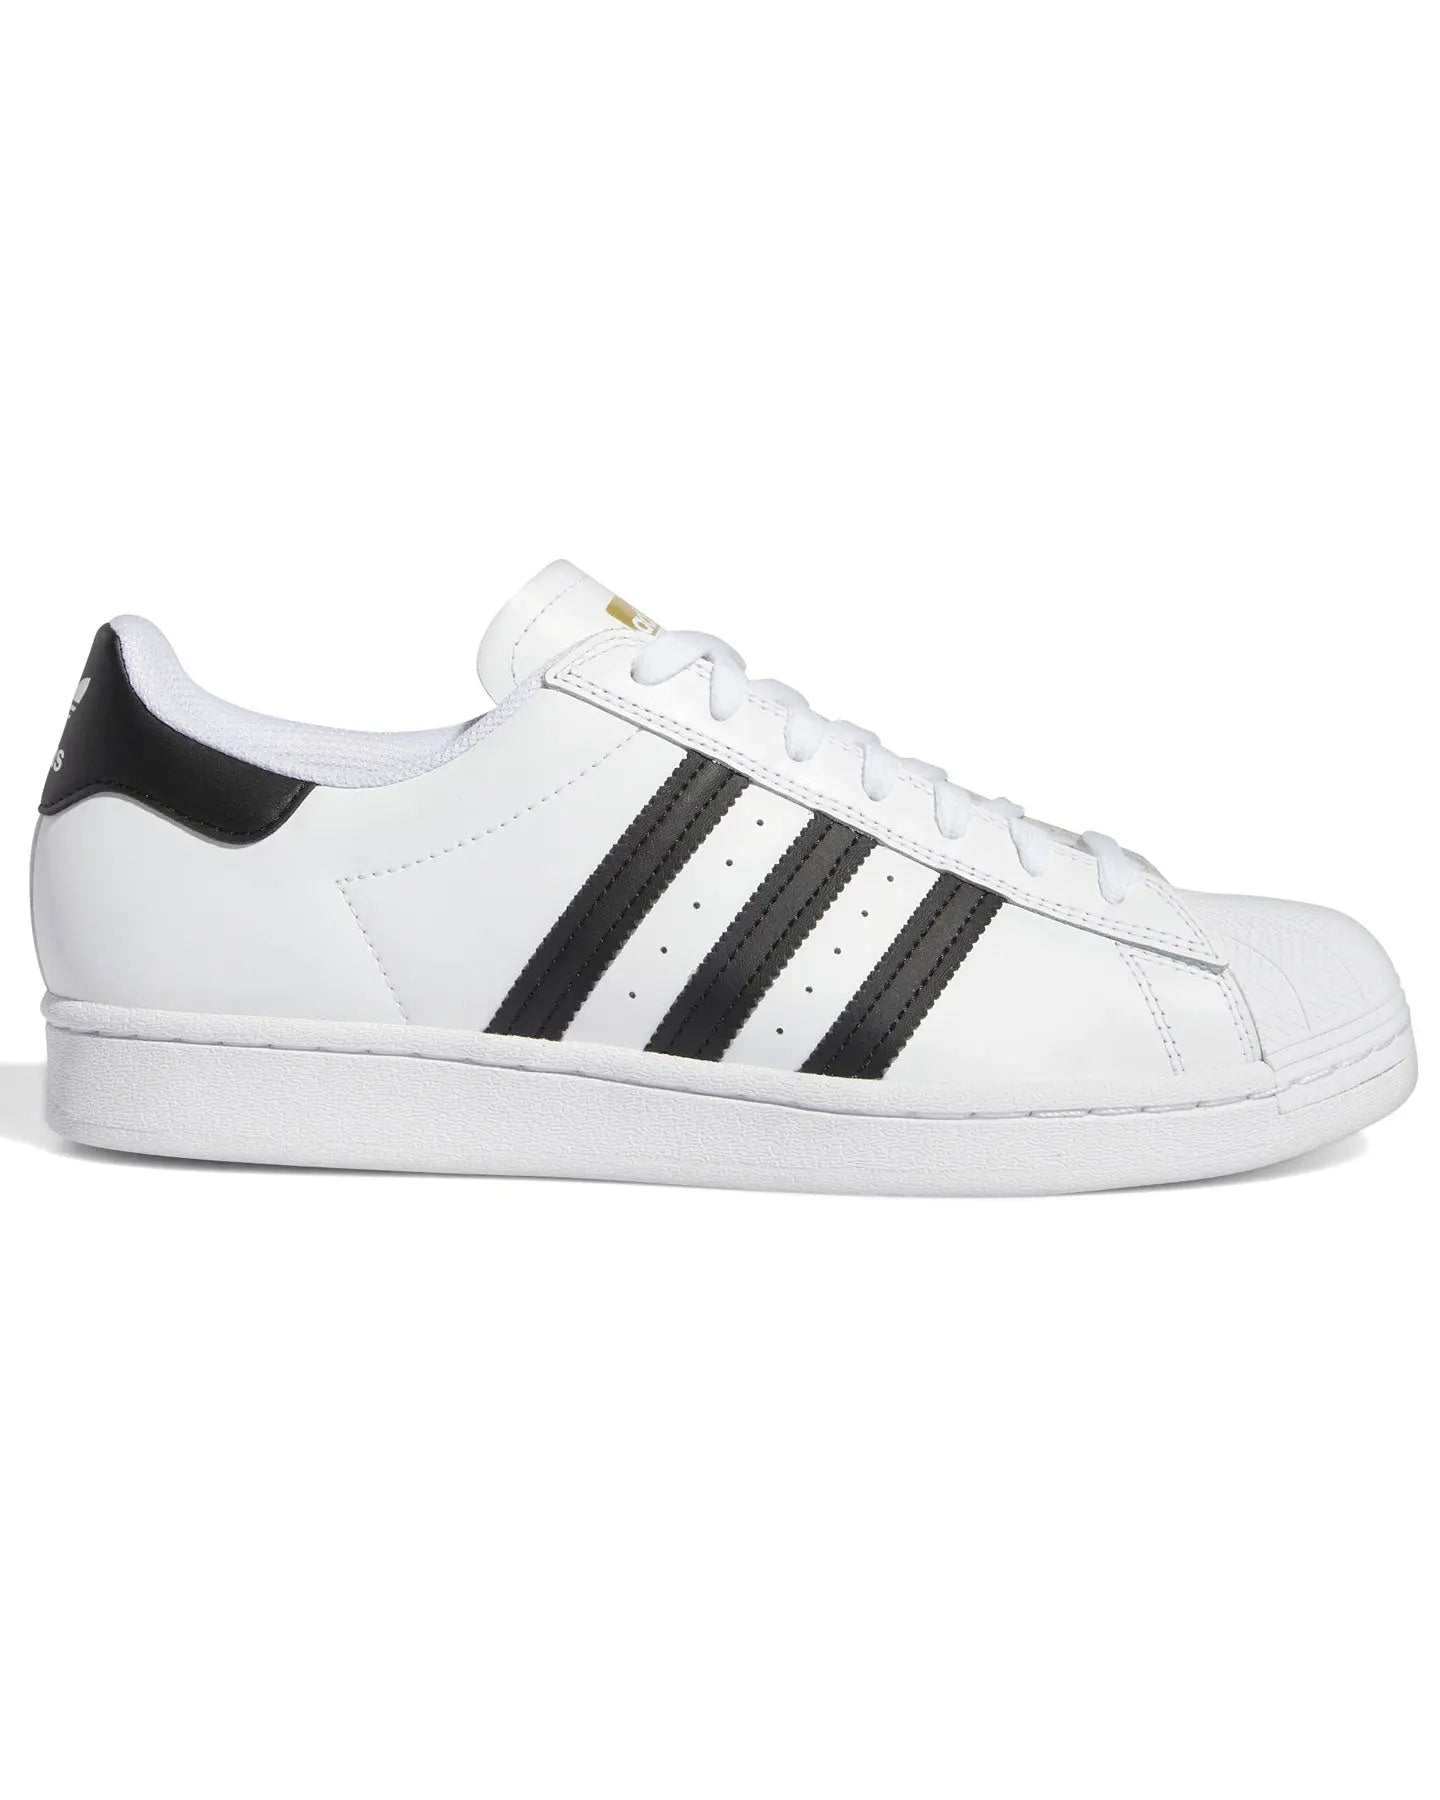 Adidas Superstar ADV - White / Black / White Footwear